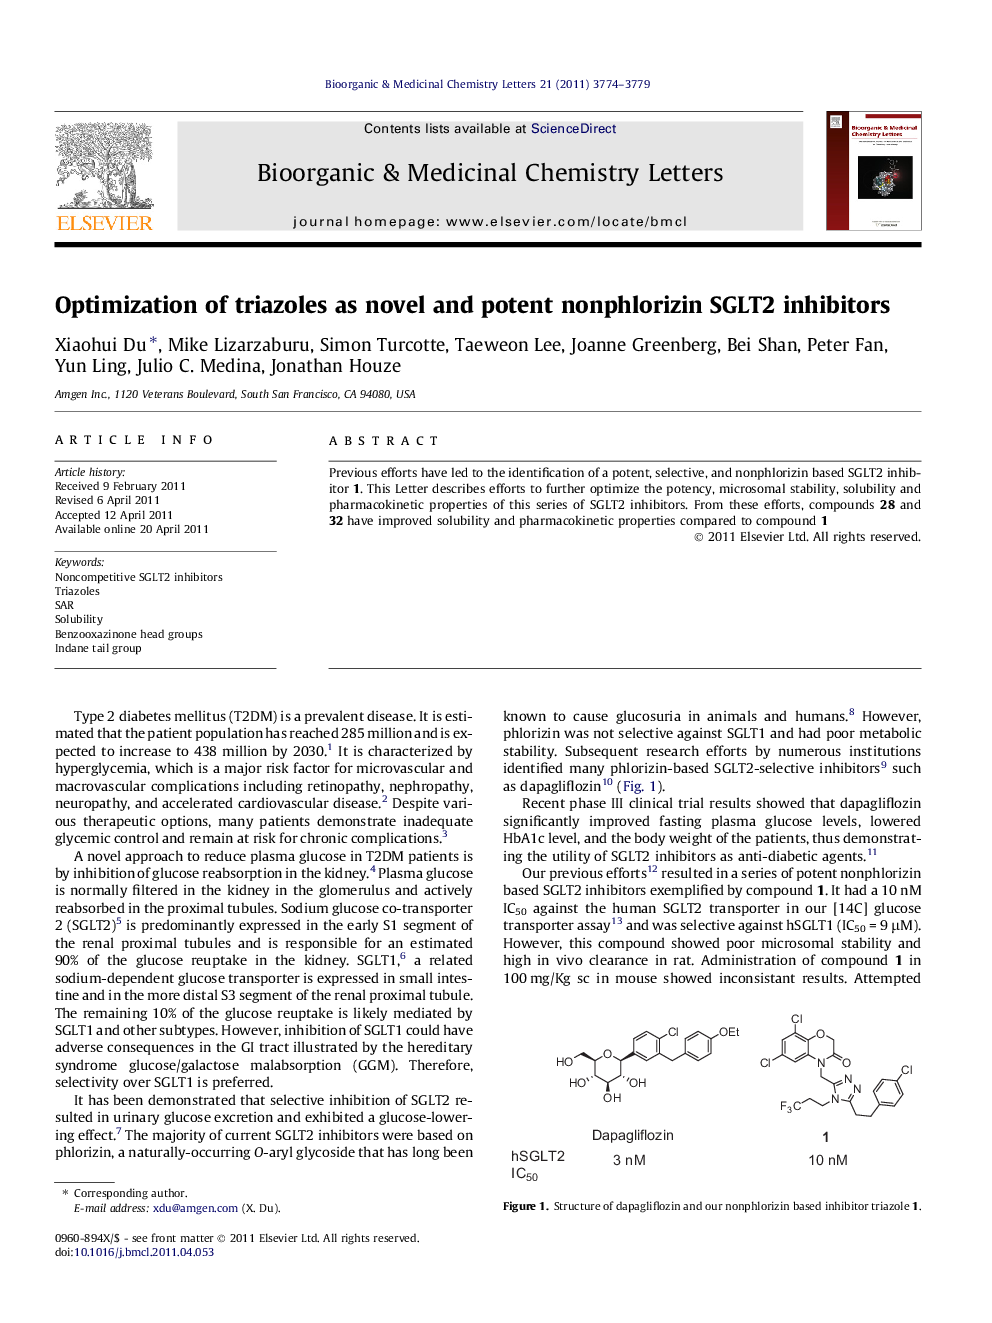 Optimization of triazoles as novel and potent nonphlorizin SGLT2 inhibitors